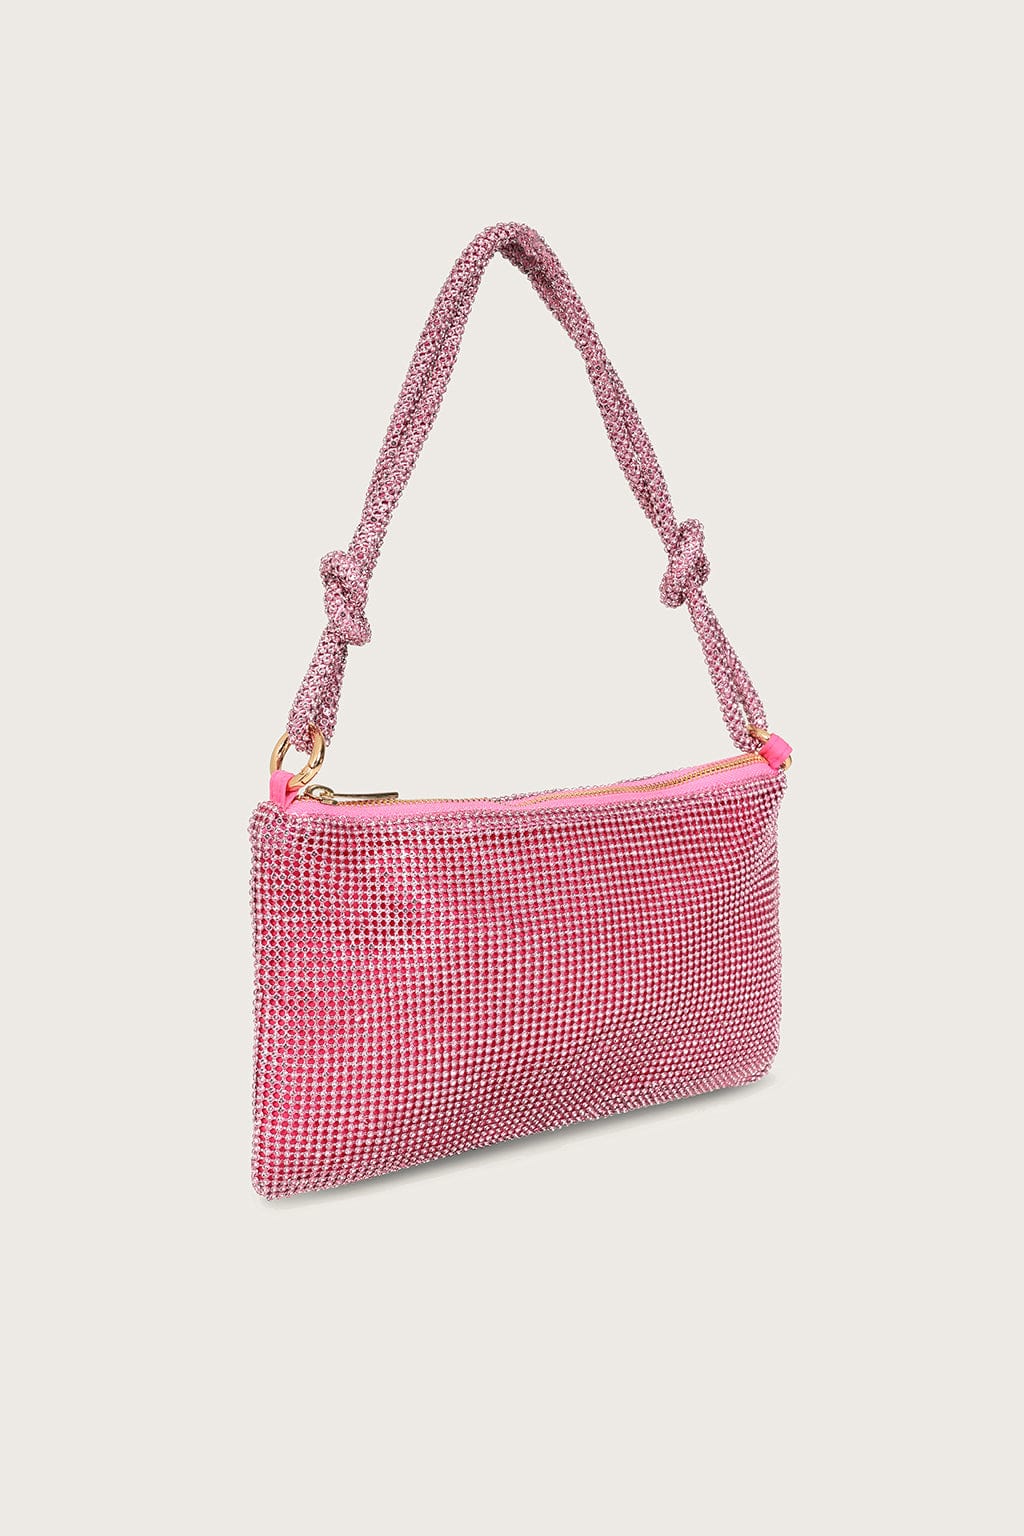 DINA Rhinestone Mini Shoulder Bag in Pink